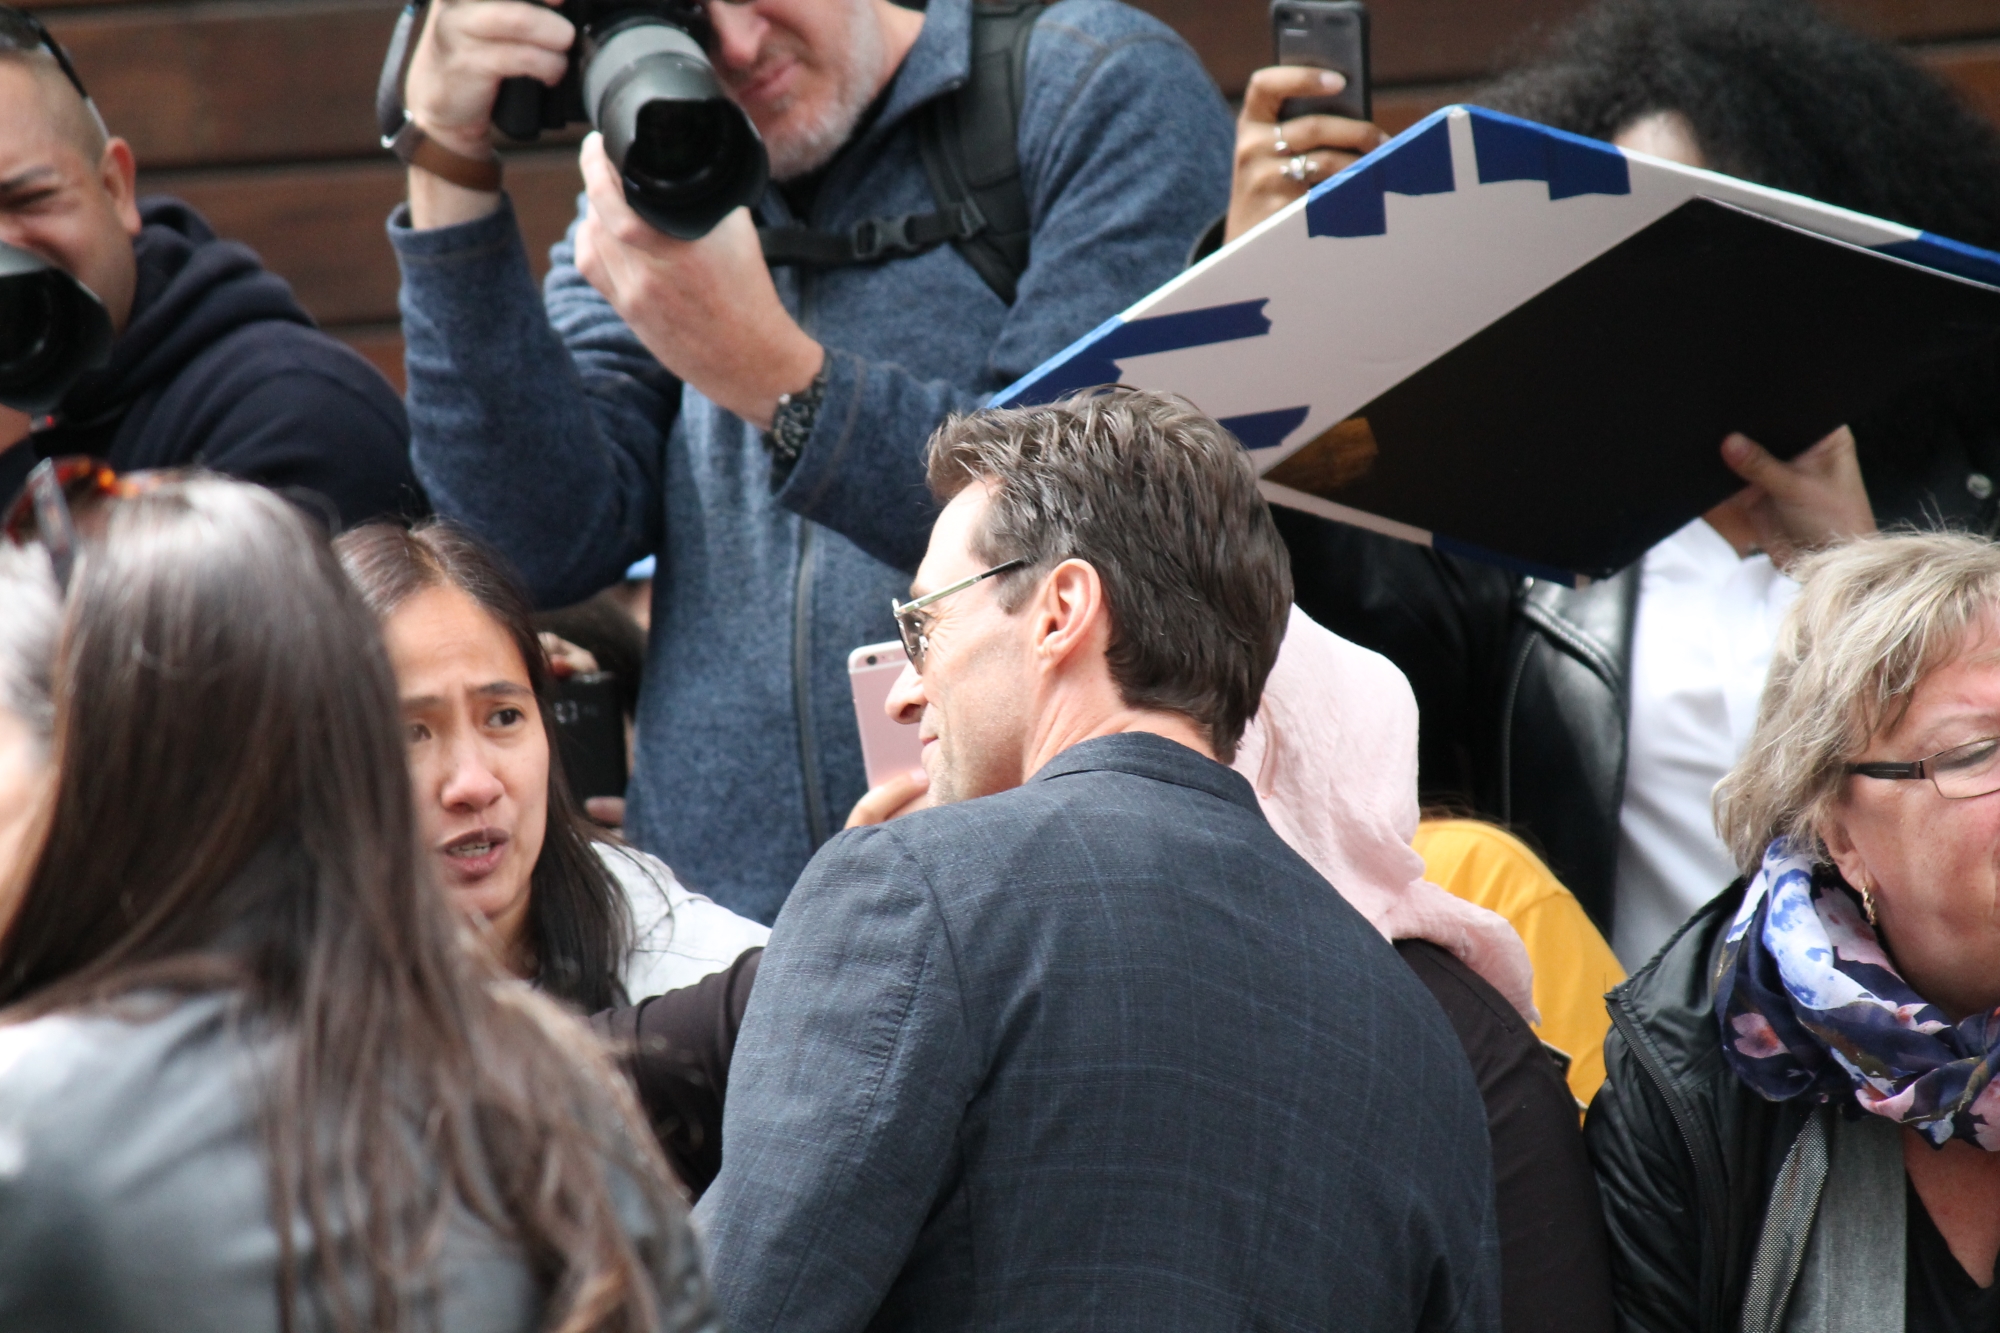 Actor Hugh Jackman at TIFF - Toronto film festival